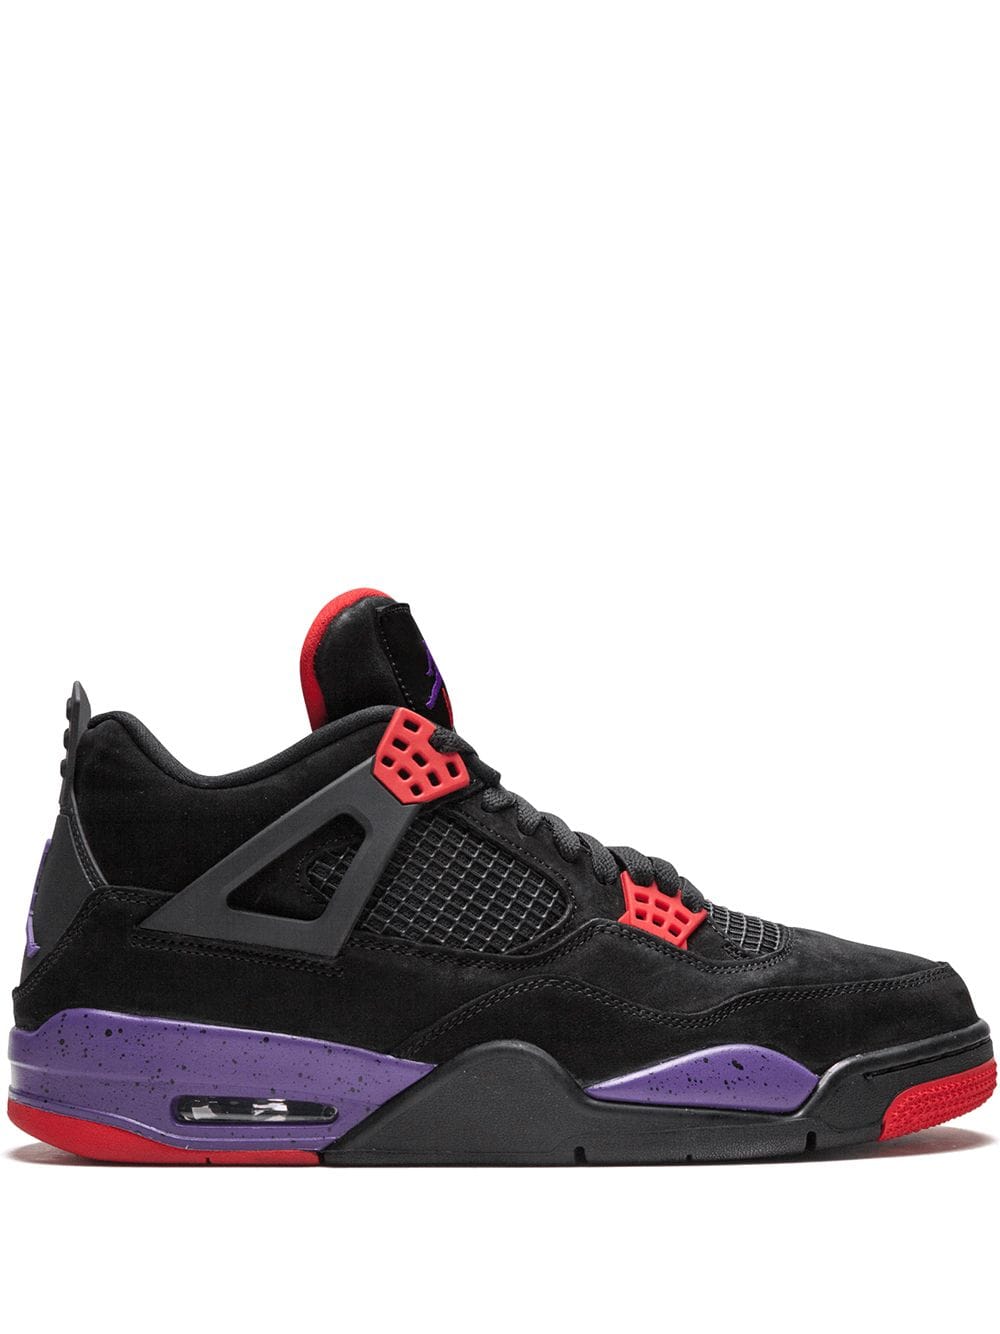 Jordan 4 Black/Purple